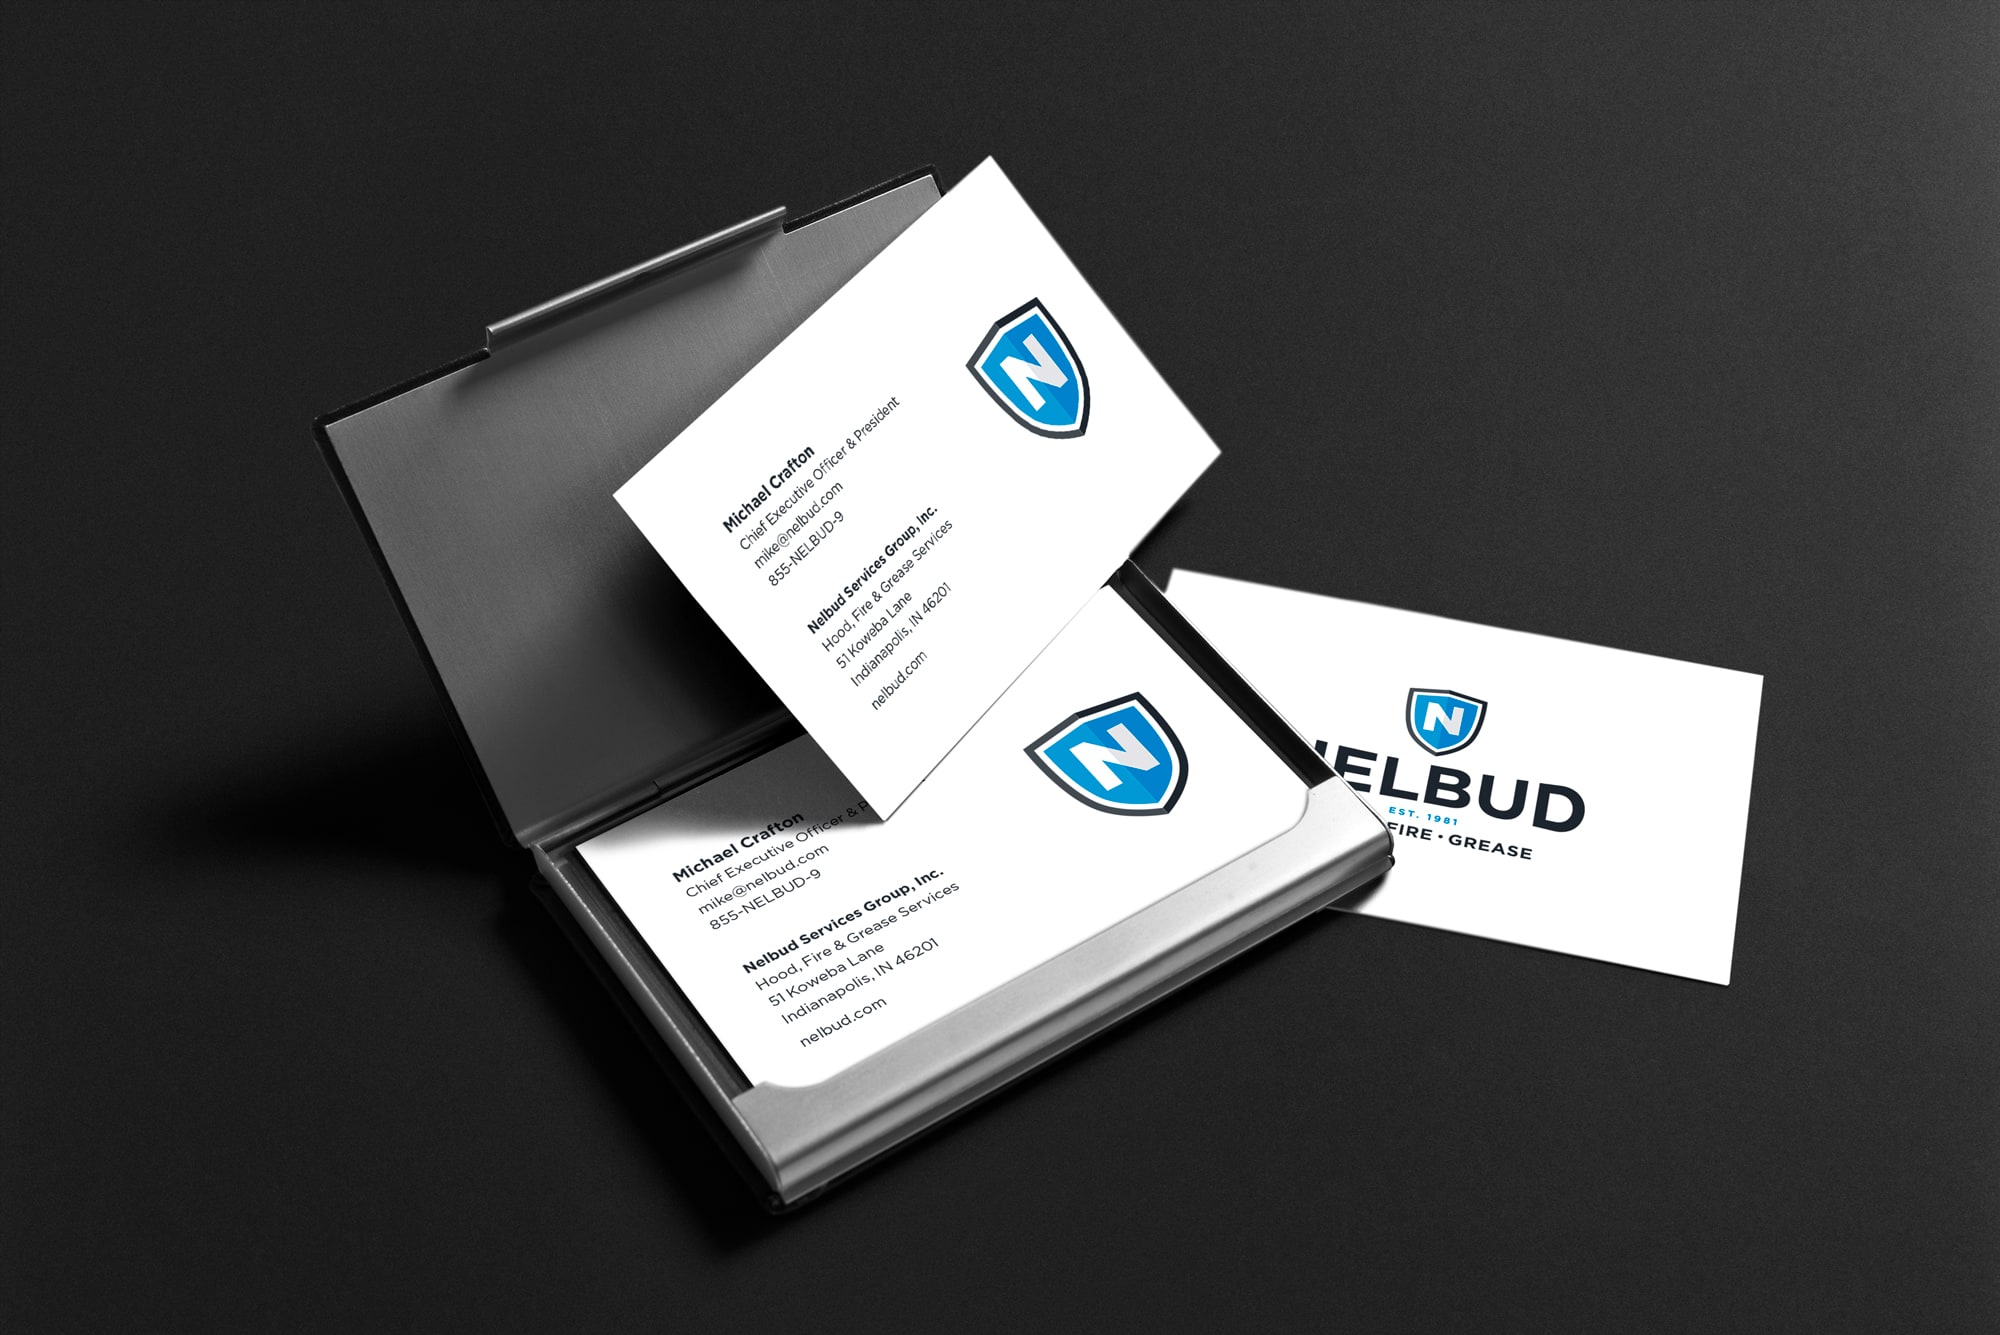 nelbud-business-card